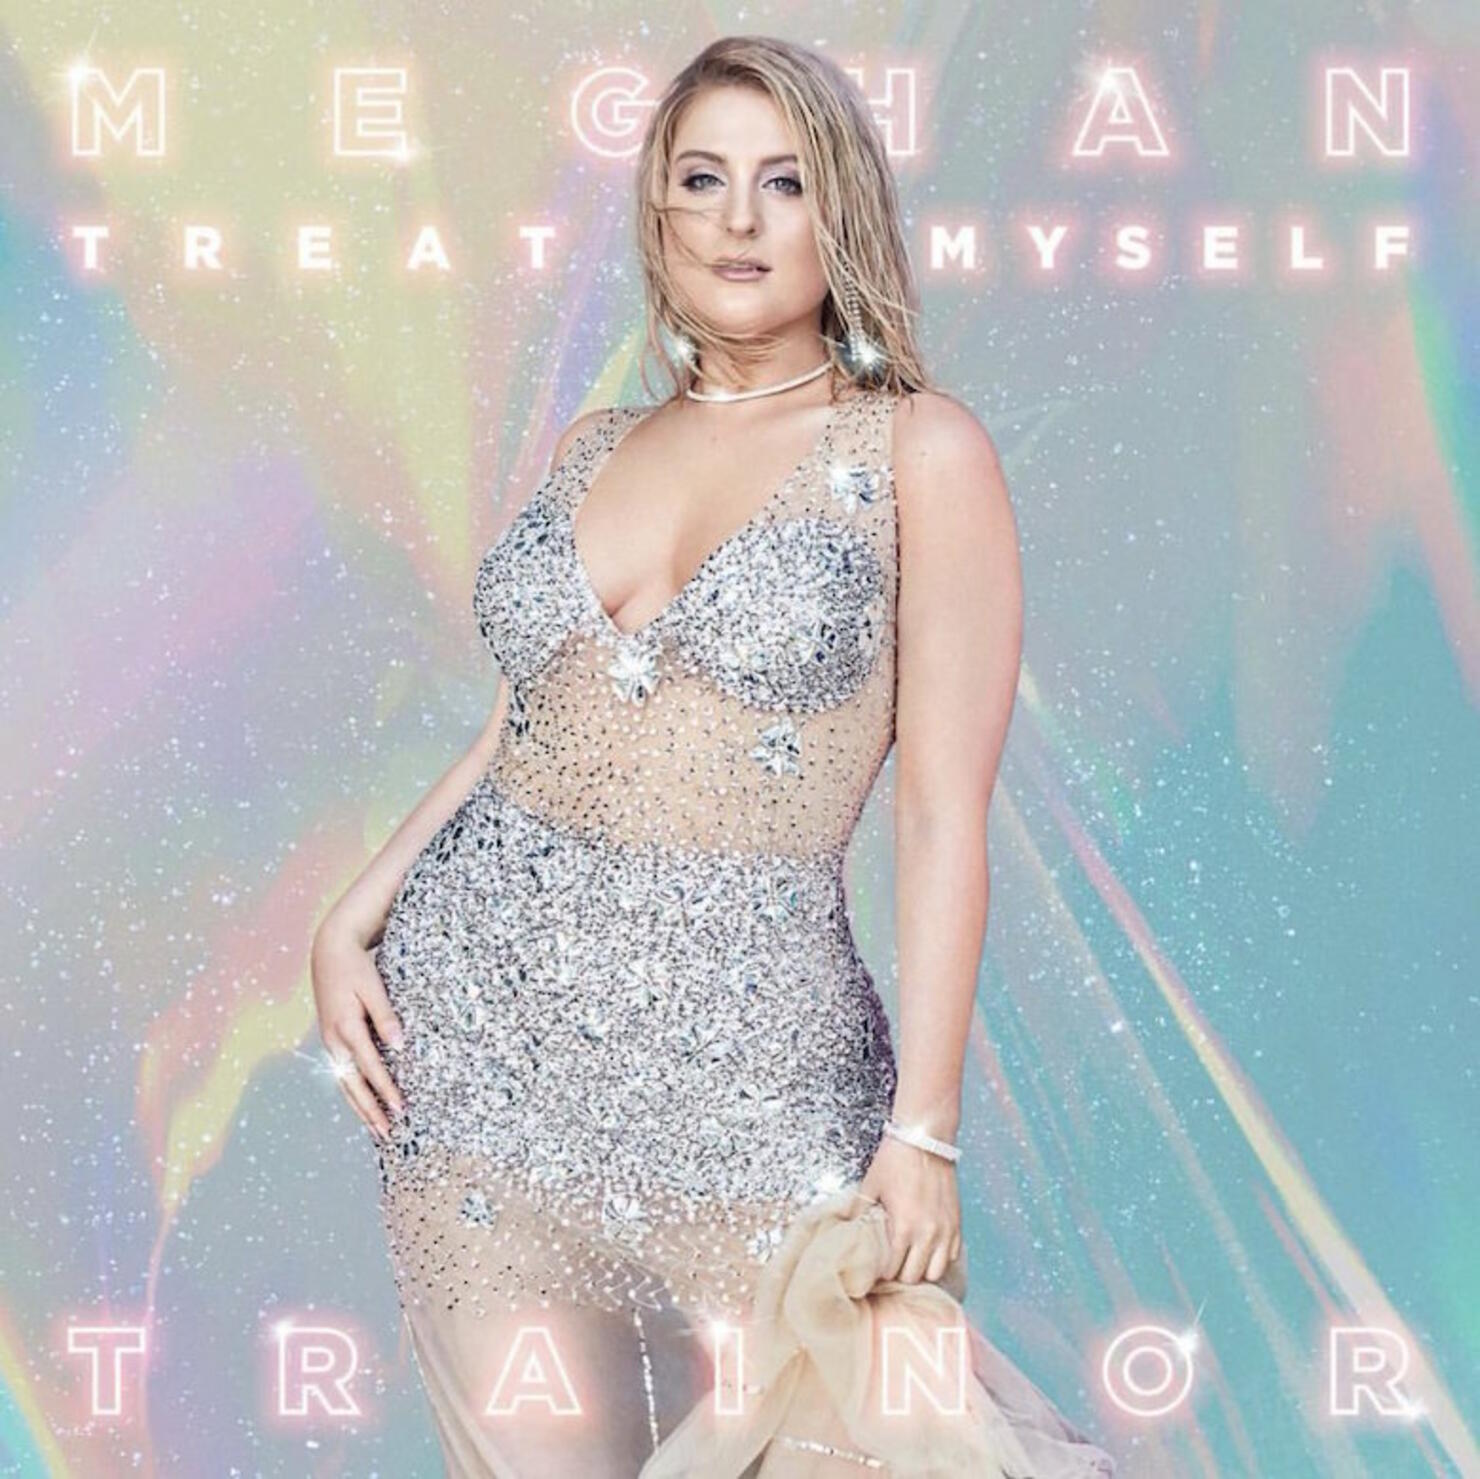 Meghan Trainor Reveals Very Sparkly Album Cover, Album Title & Release